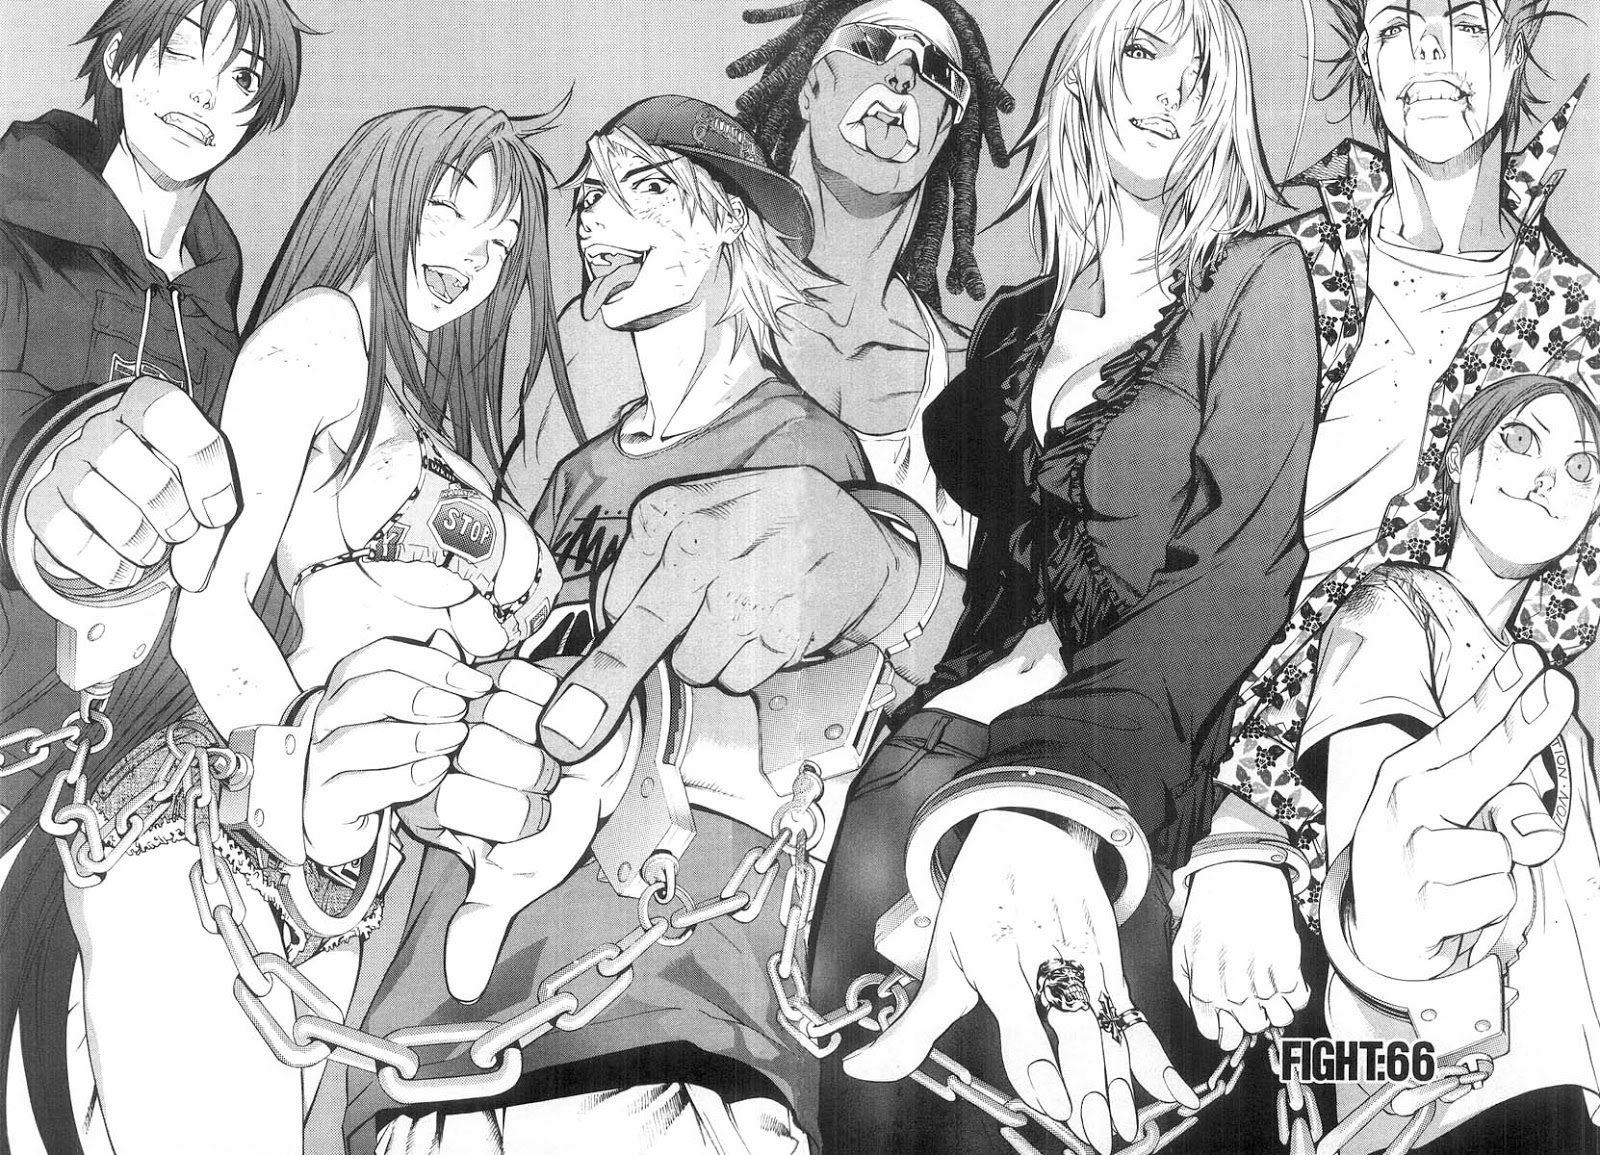 Art] Amazing panel ( Tenjou Tenge) : r/manga